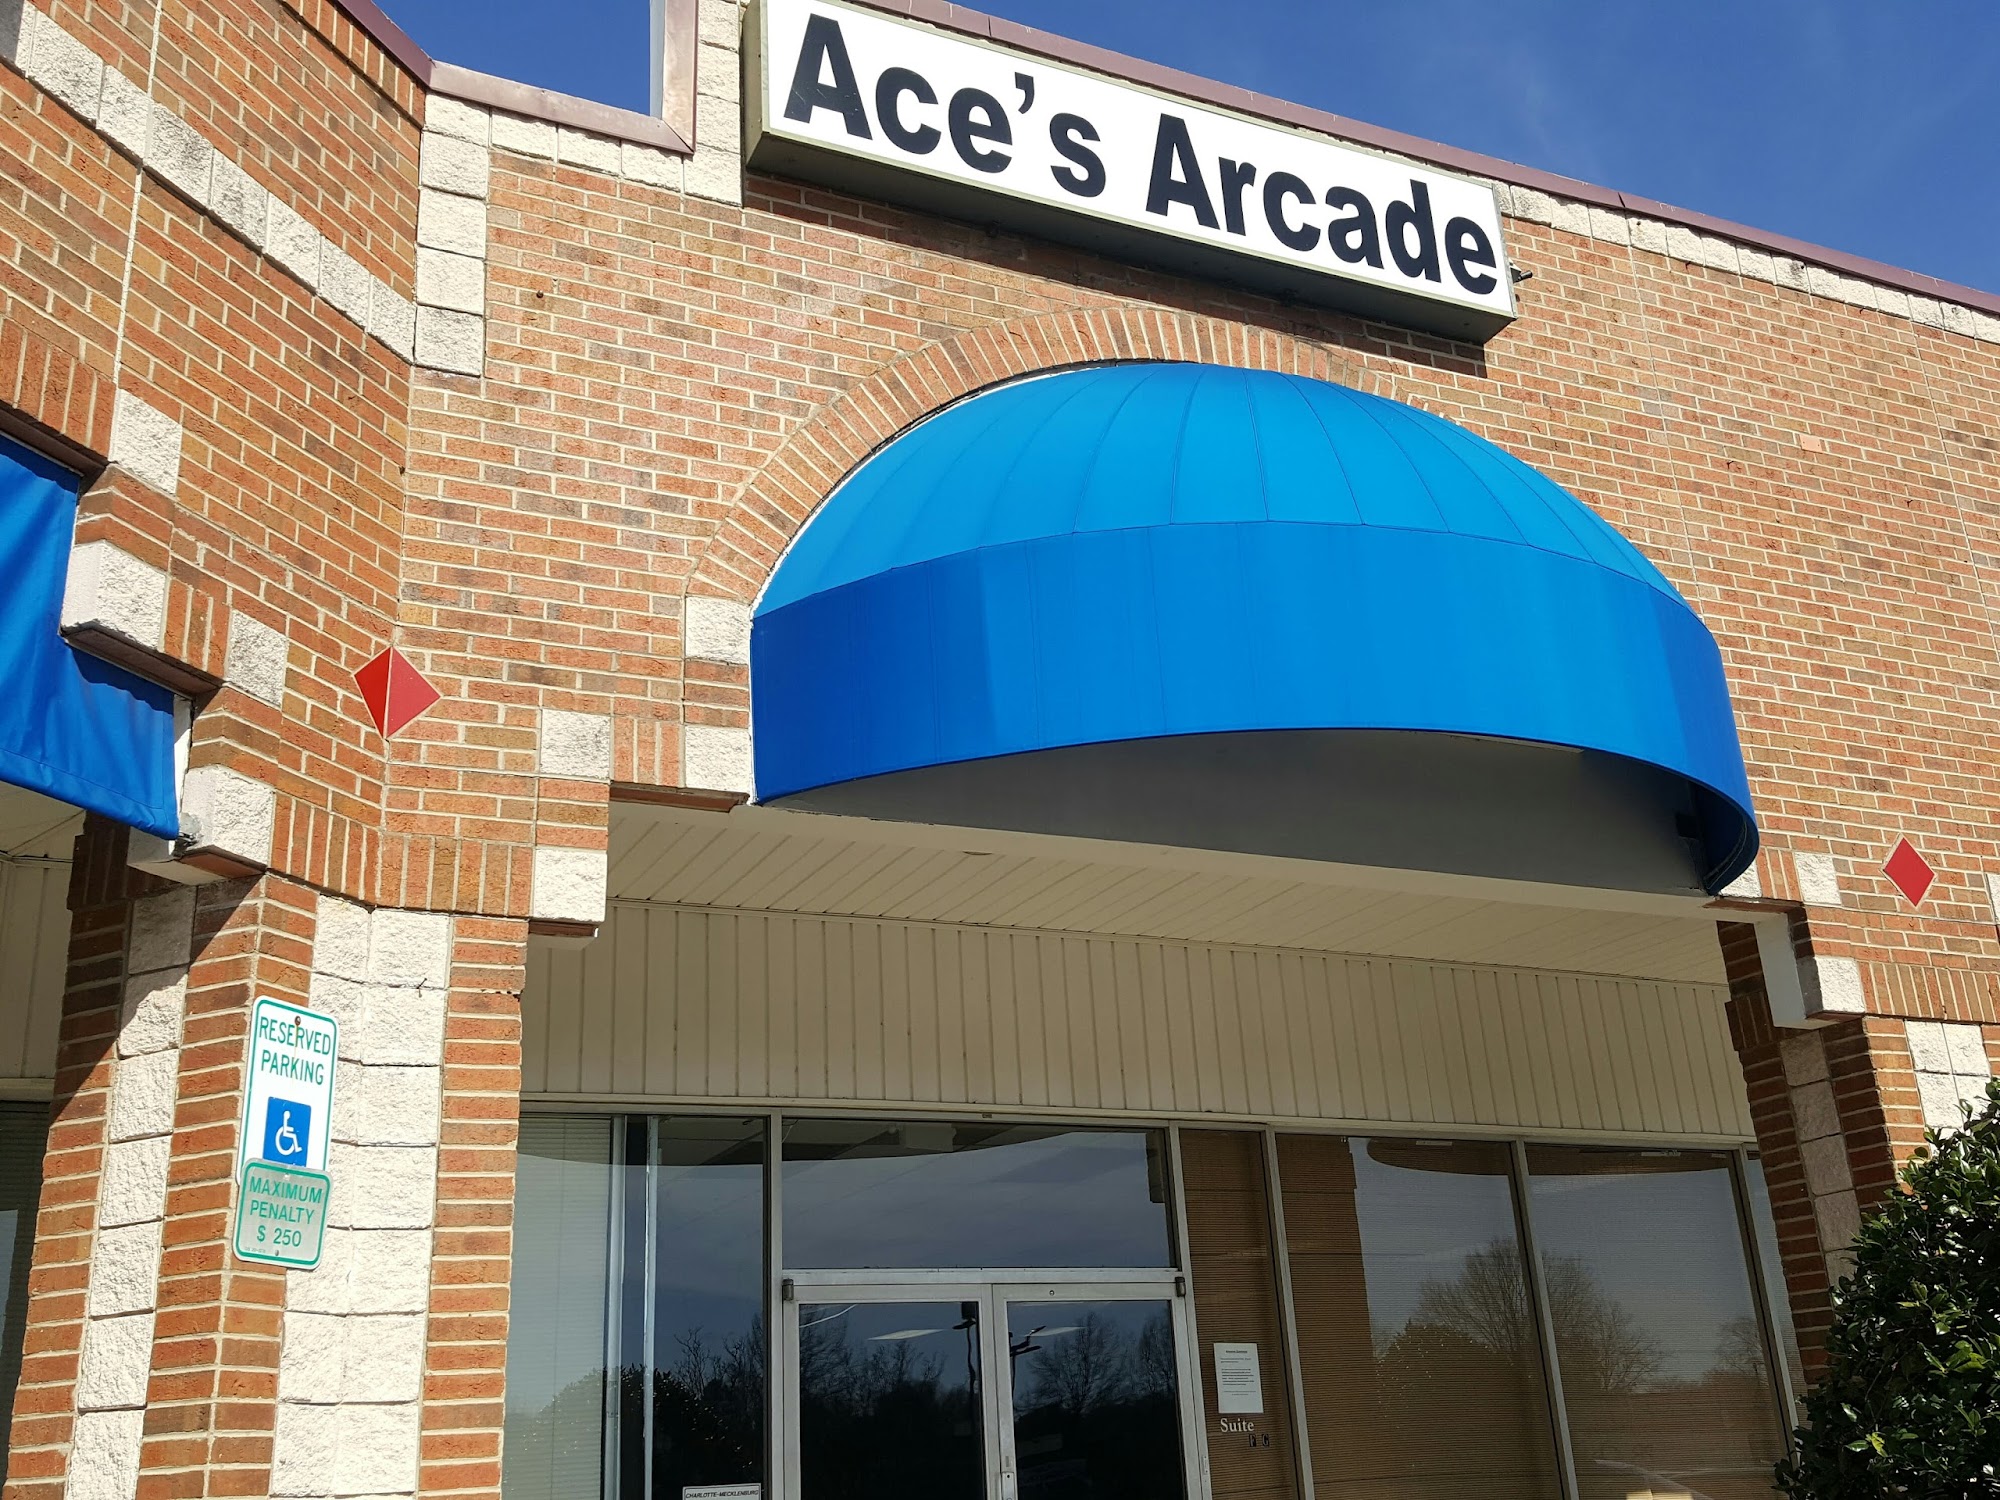 Ace's Arcade